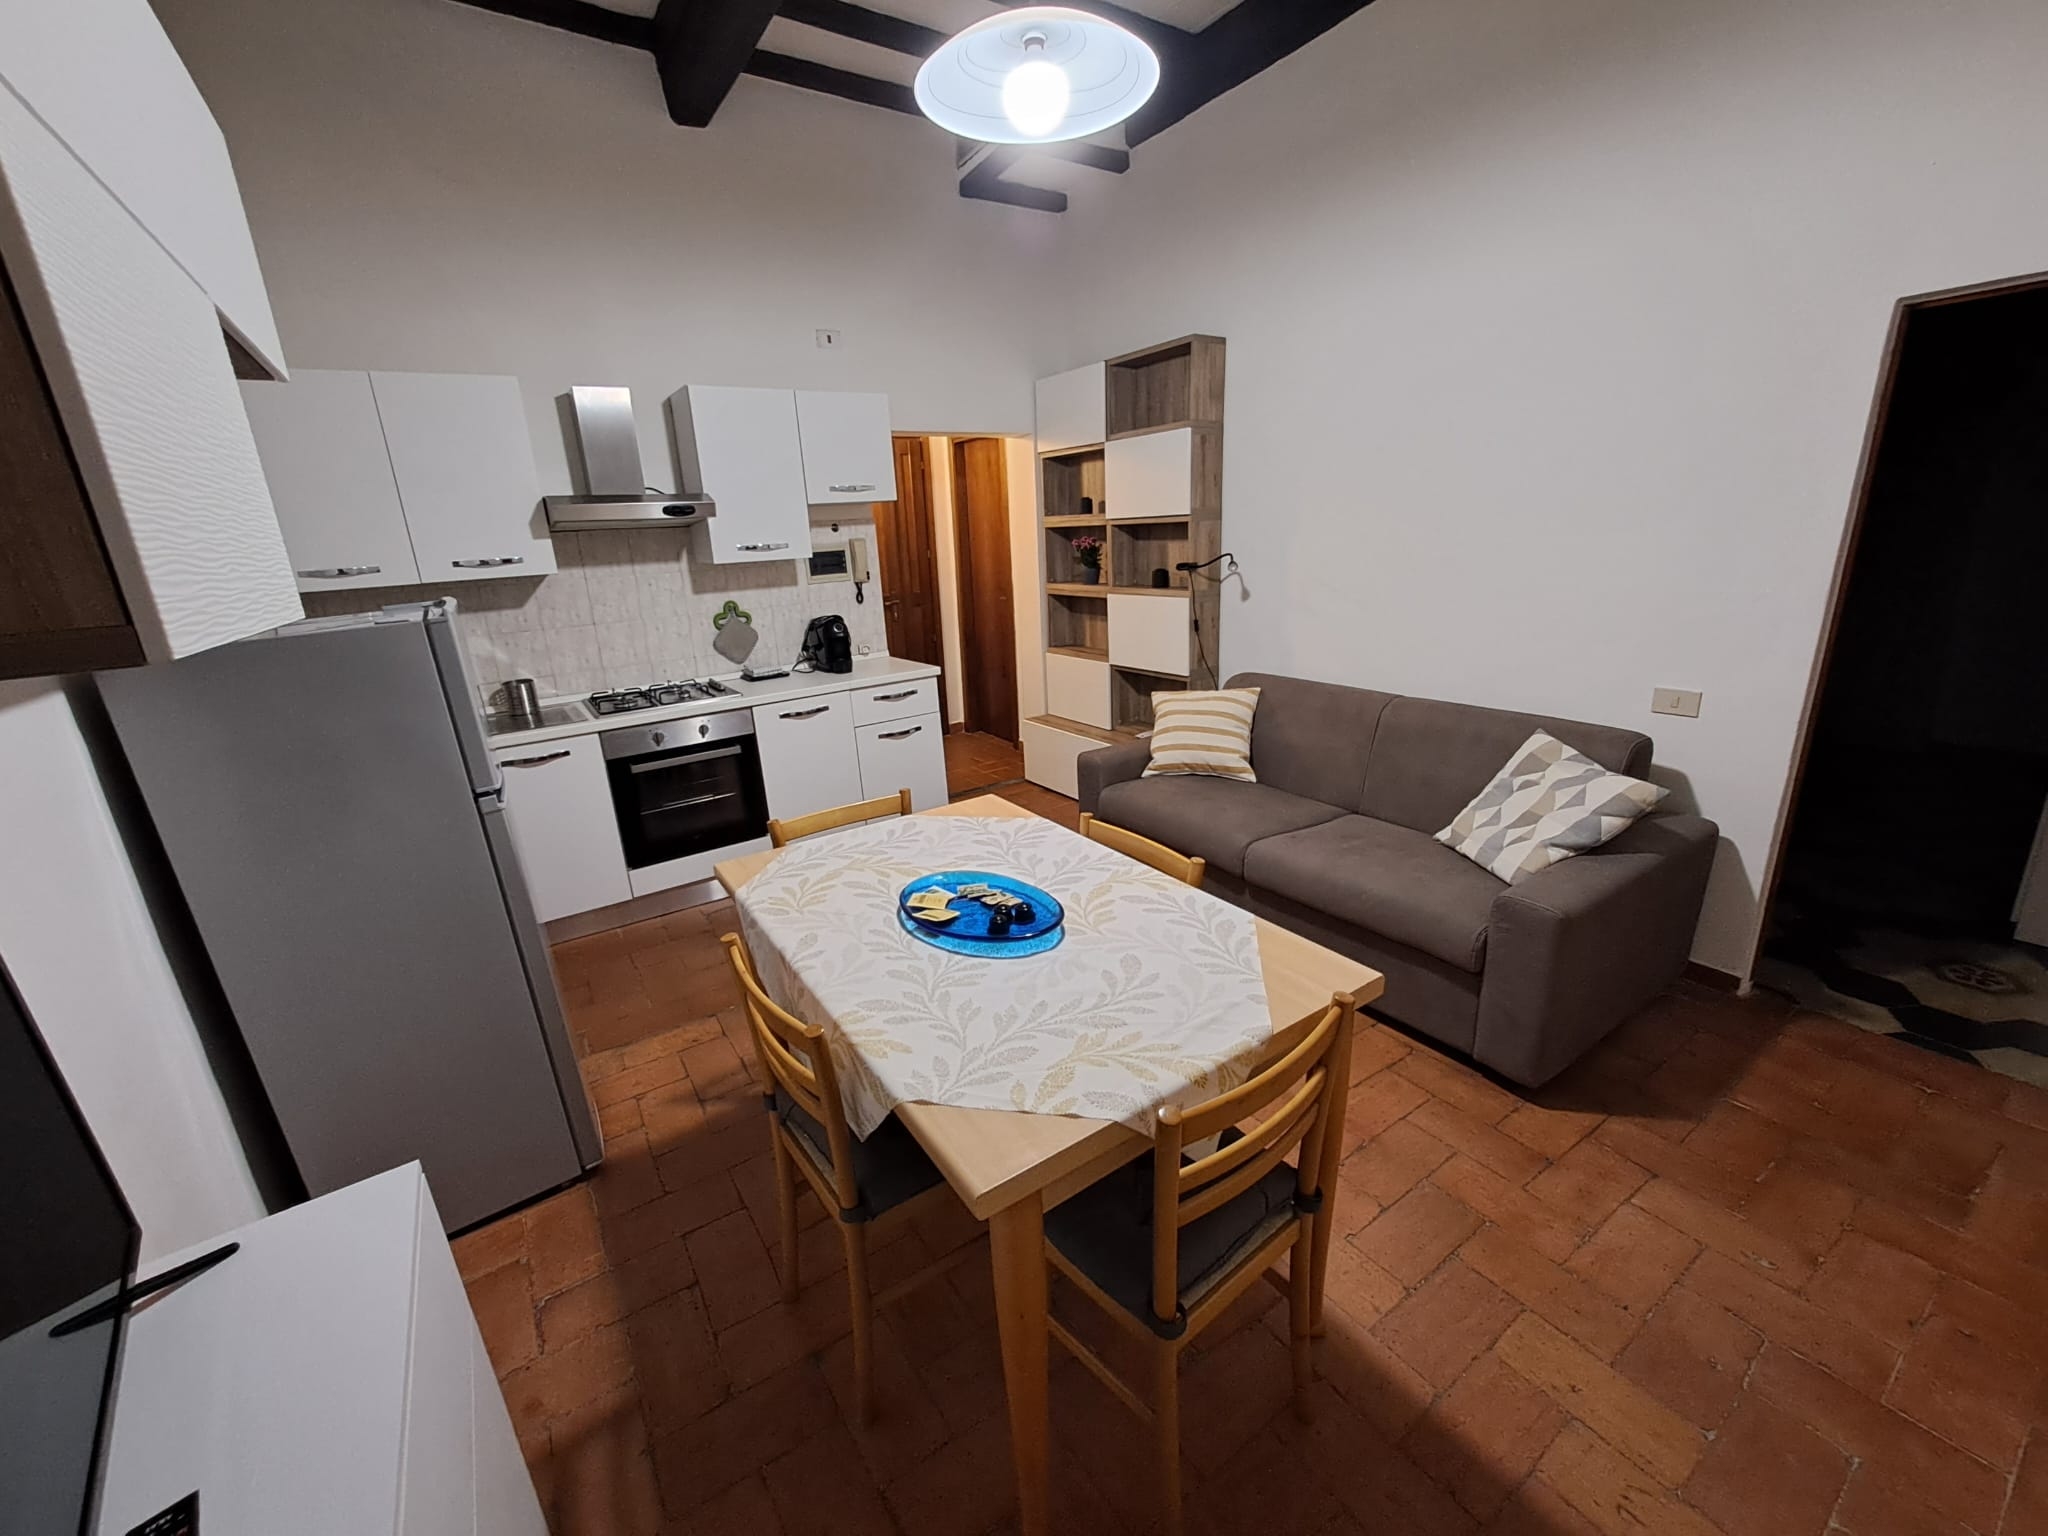 Casa di Matteo, Colle Val d 'Elsa - Condominiums for Rent in Colle di Val d' Elsa, Toscana, Italy - Airbnb